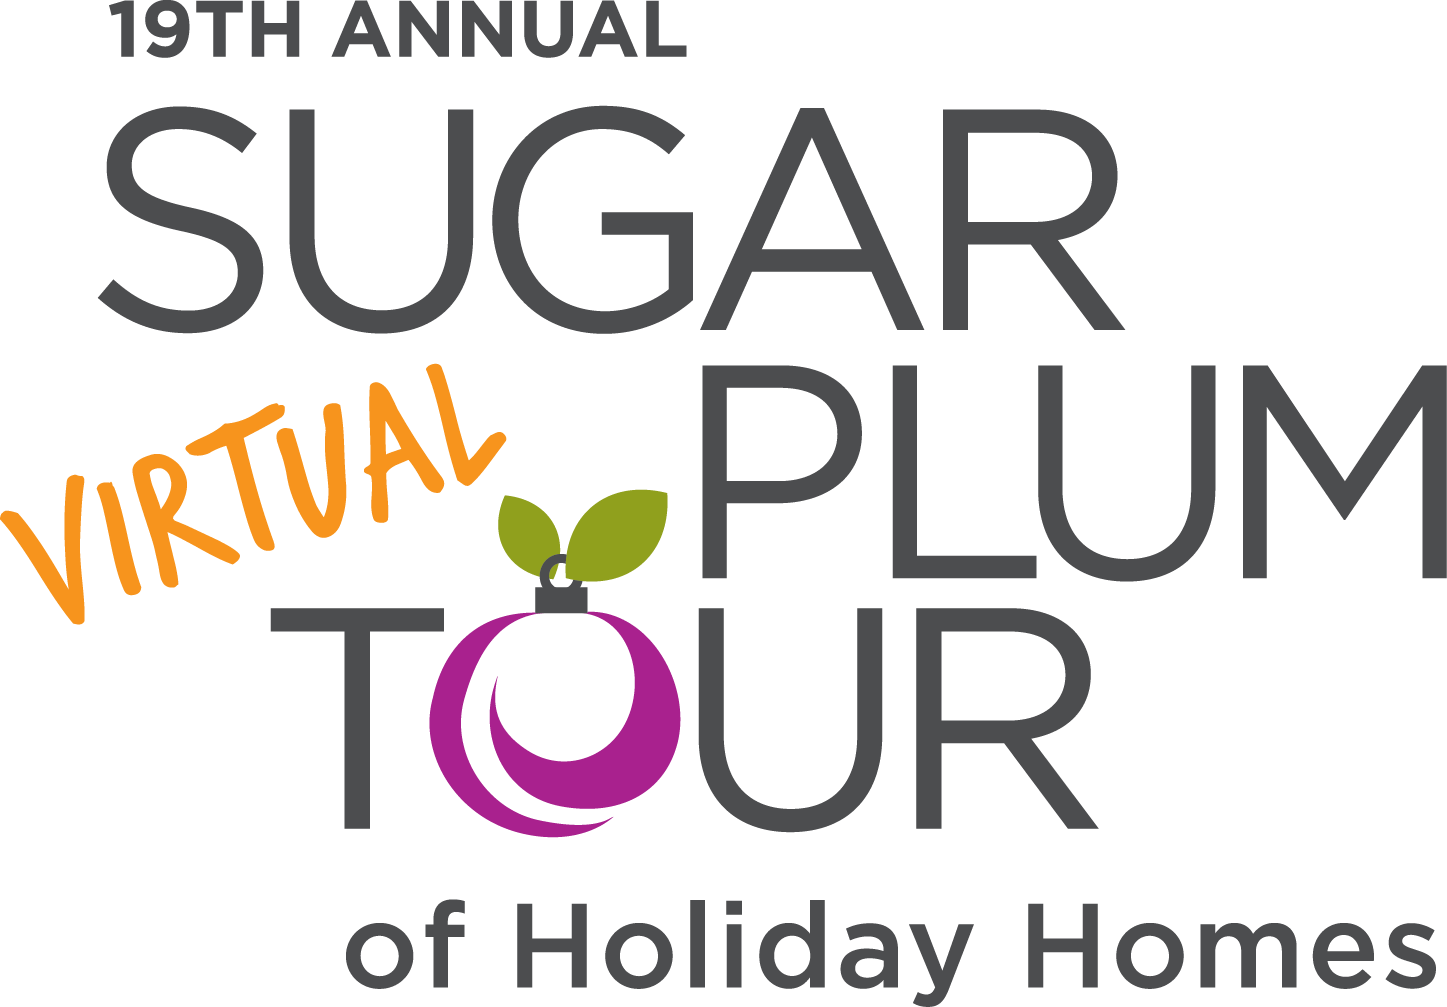 Sugar Plum Tour of Holiday Homes announces virtual tour